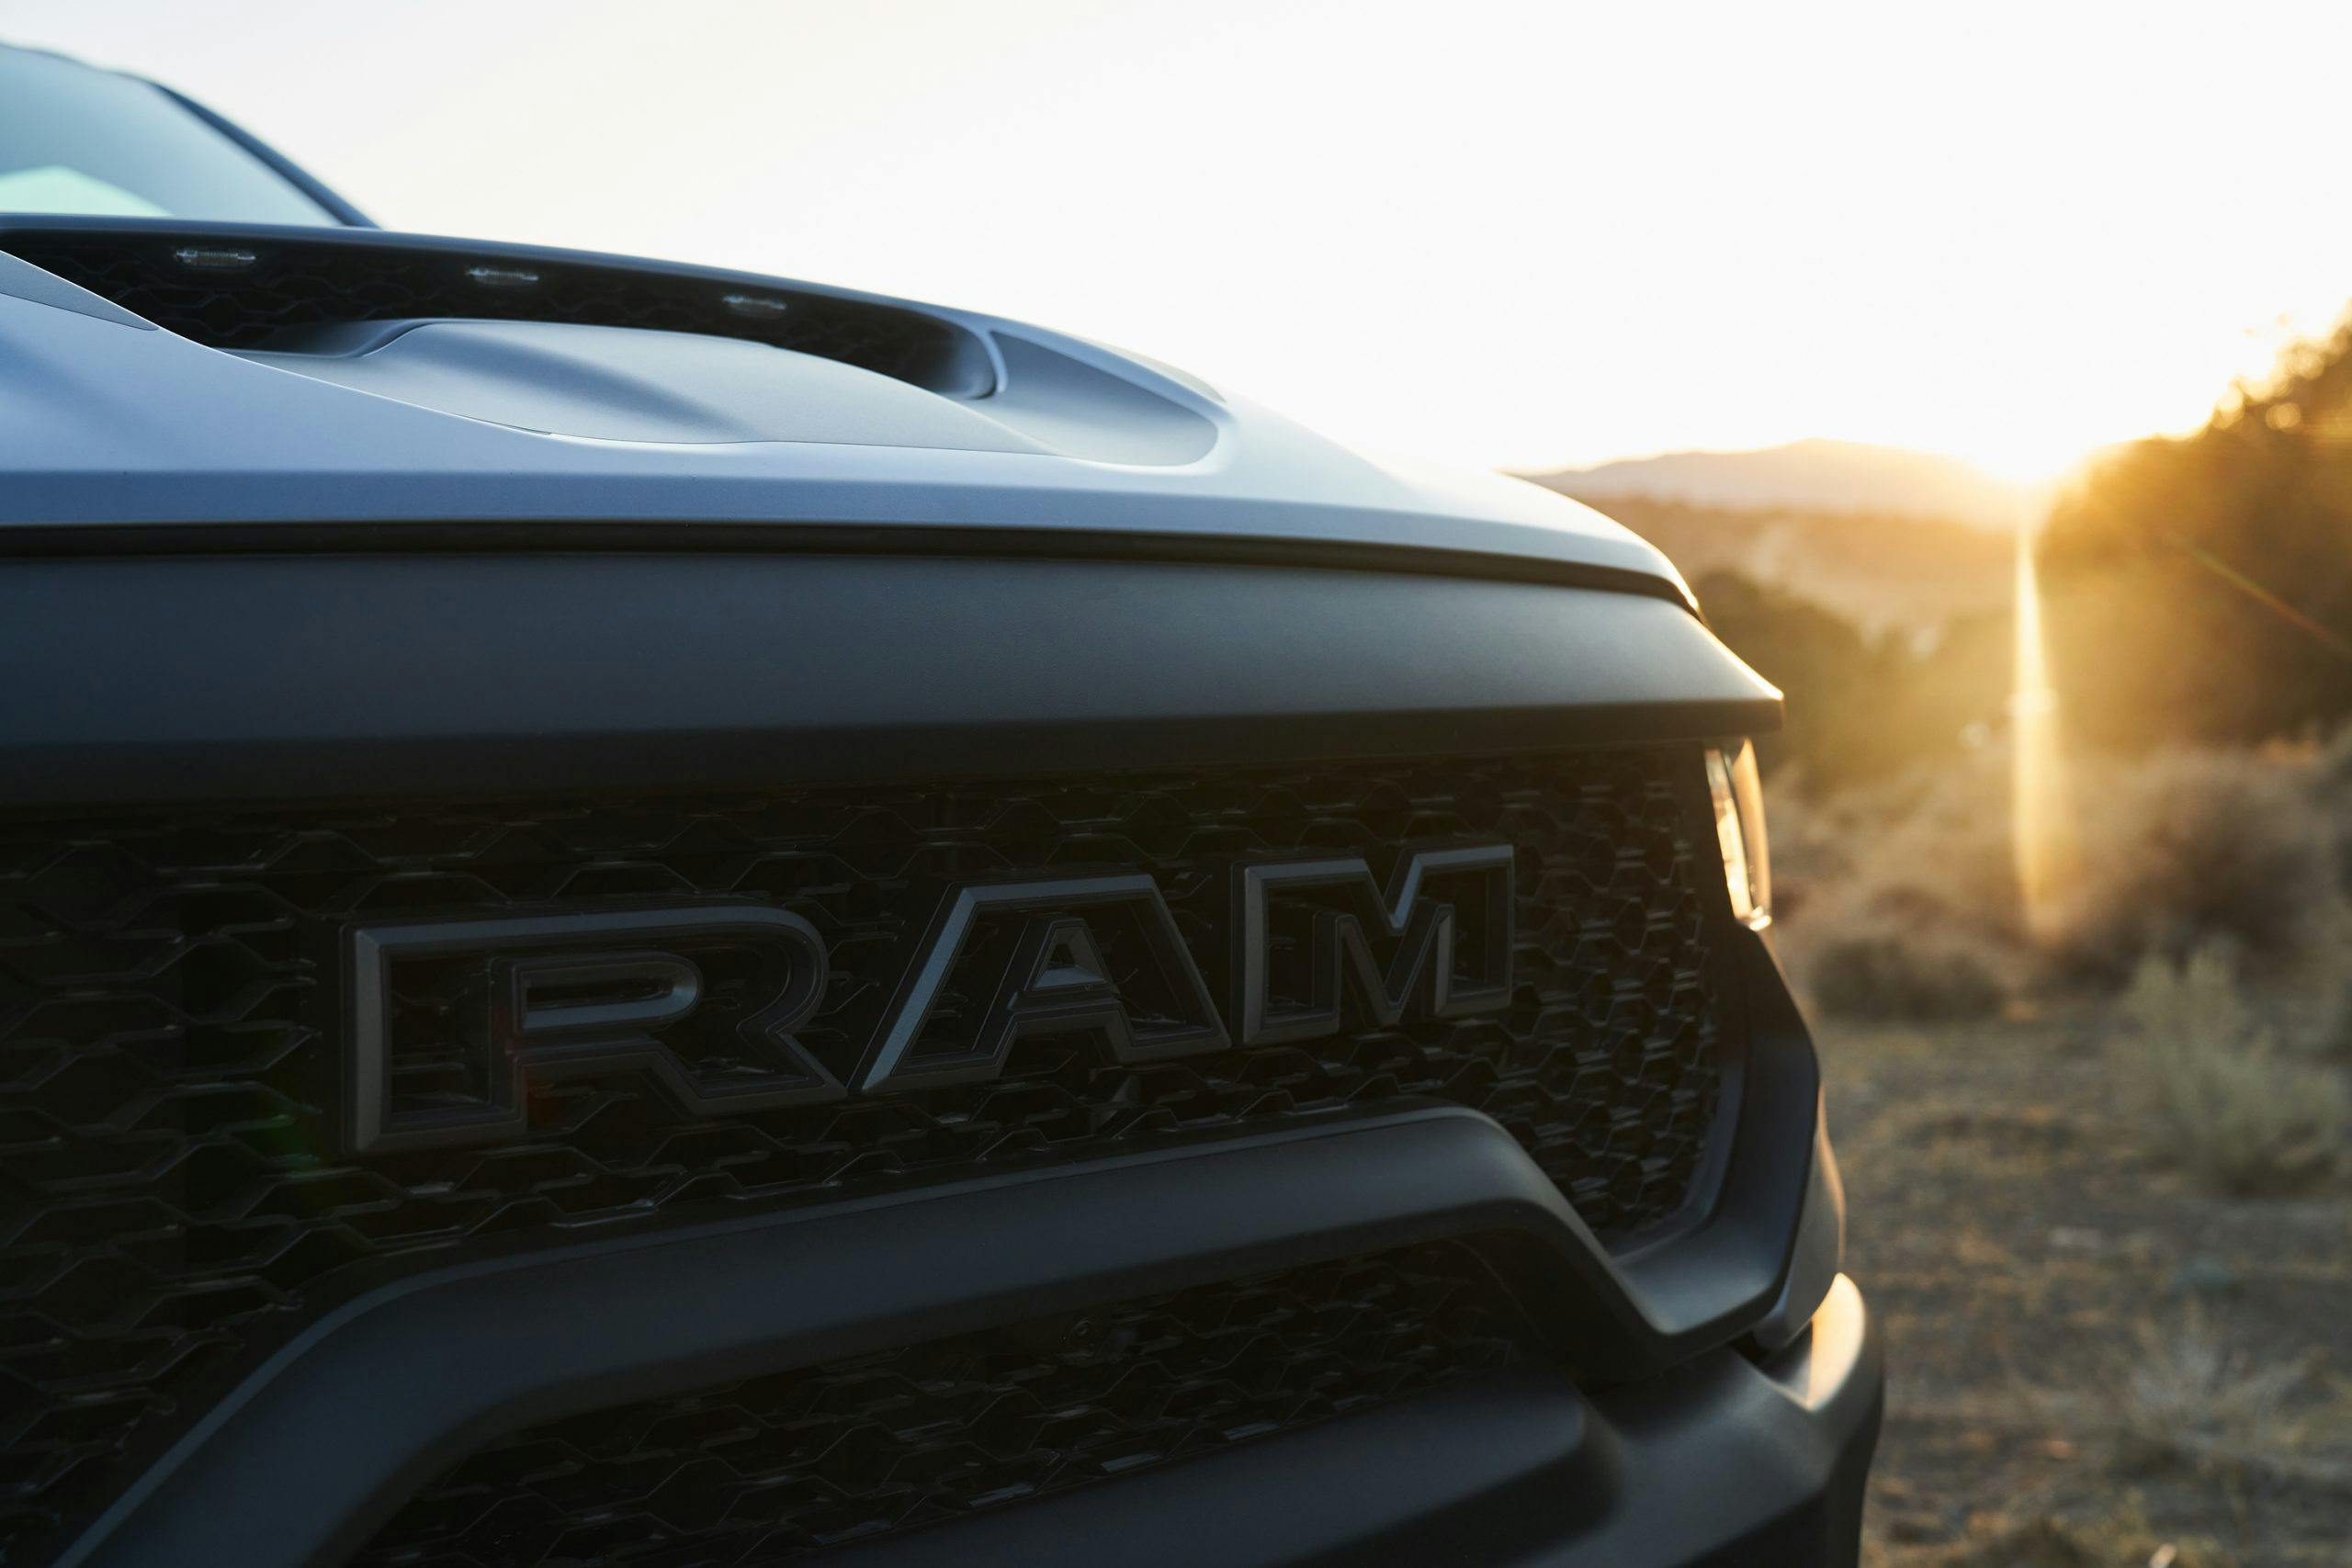 2021 Ram 1500 TRX grille detail